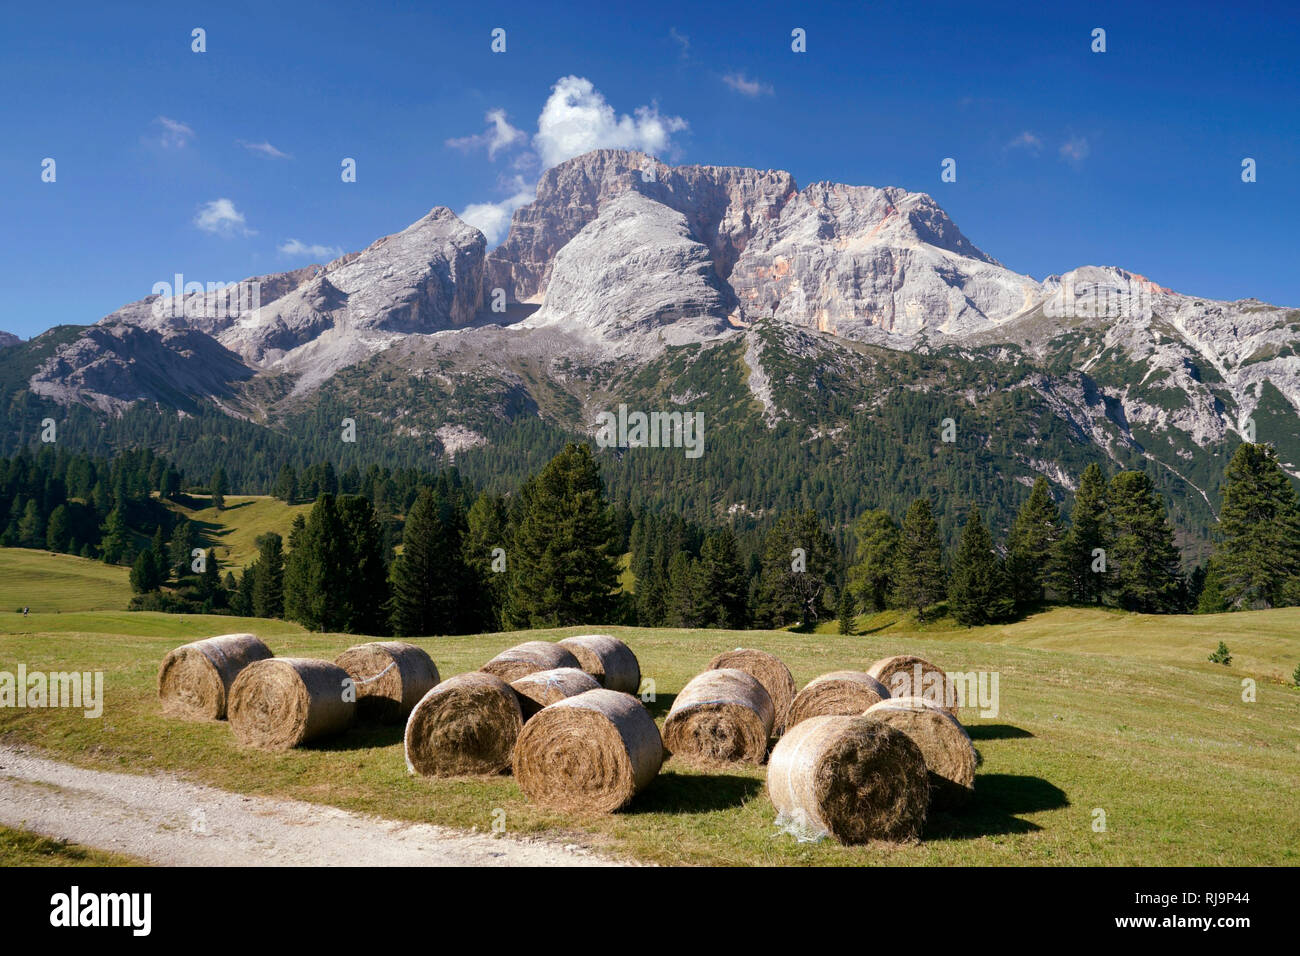 Europa, Italien, Südtirol, Pragser Dolomiten, Plätzwiese, Hohe Gaisl, 3146m, Heu-Ballen Stock Photo